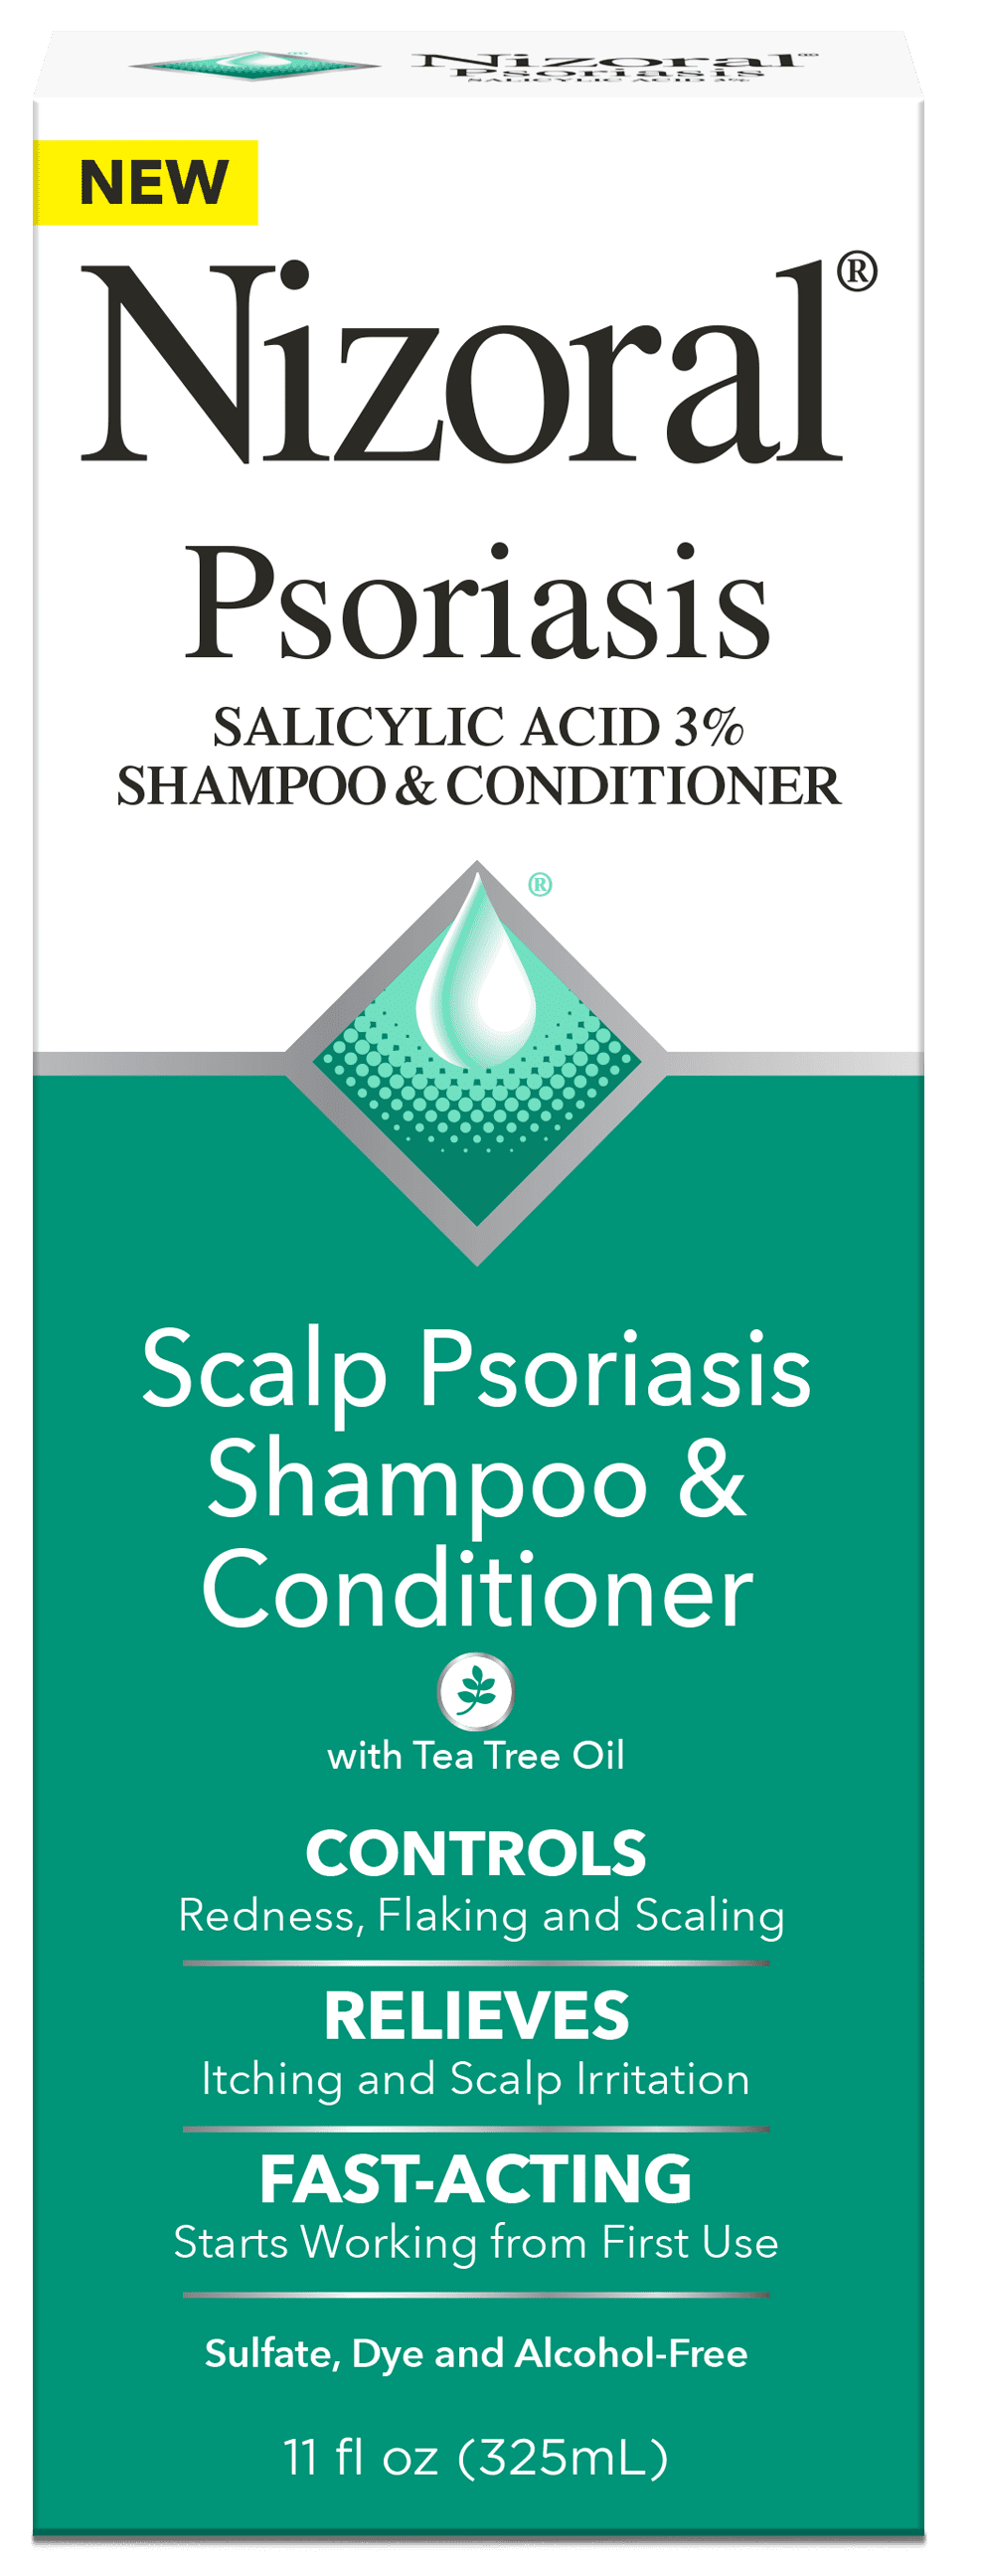 nizoral psoriasis shampoo & conditioner for scalp psoriasis